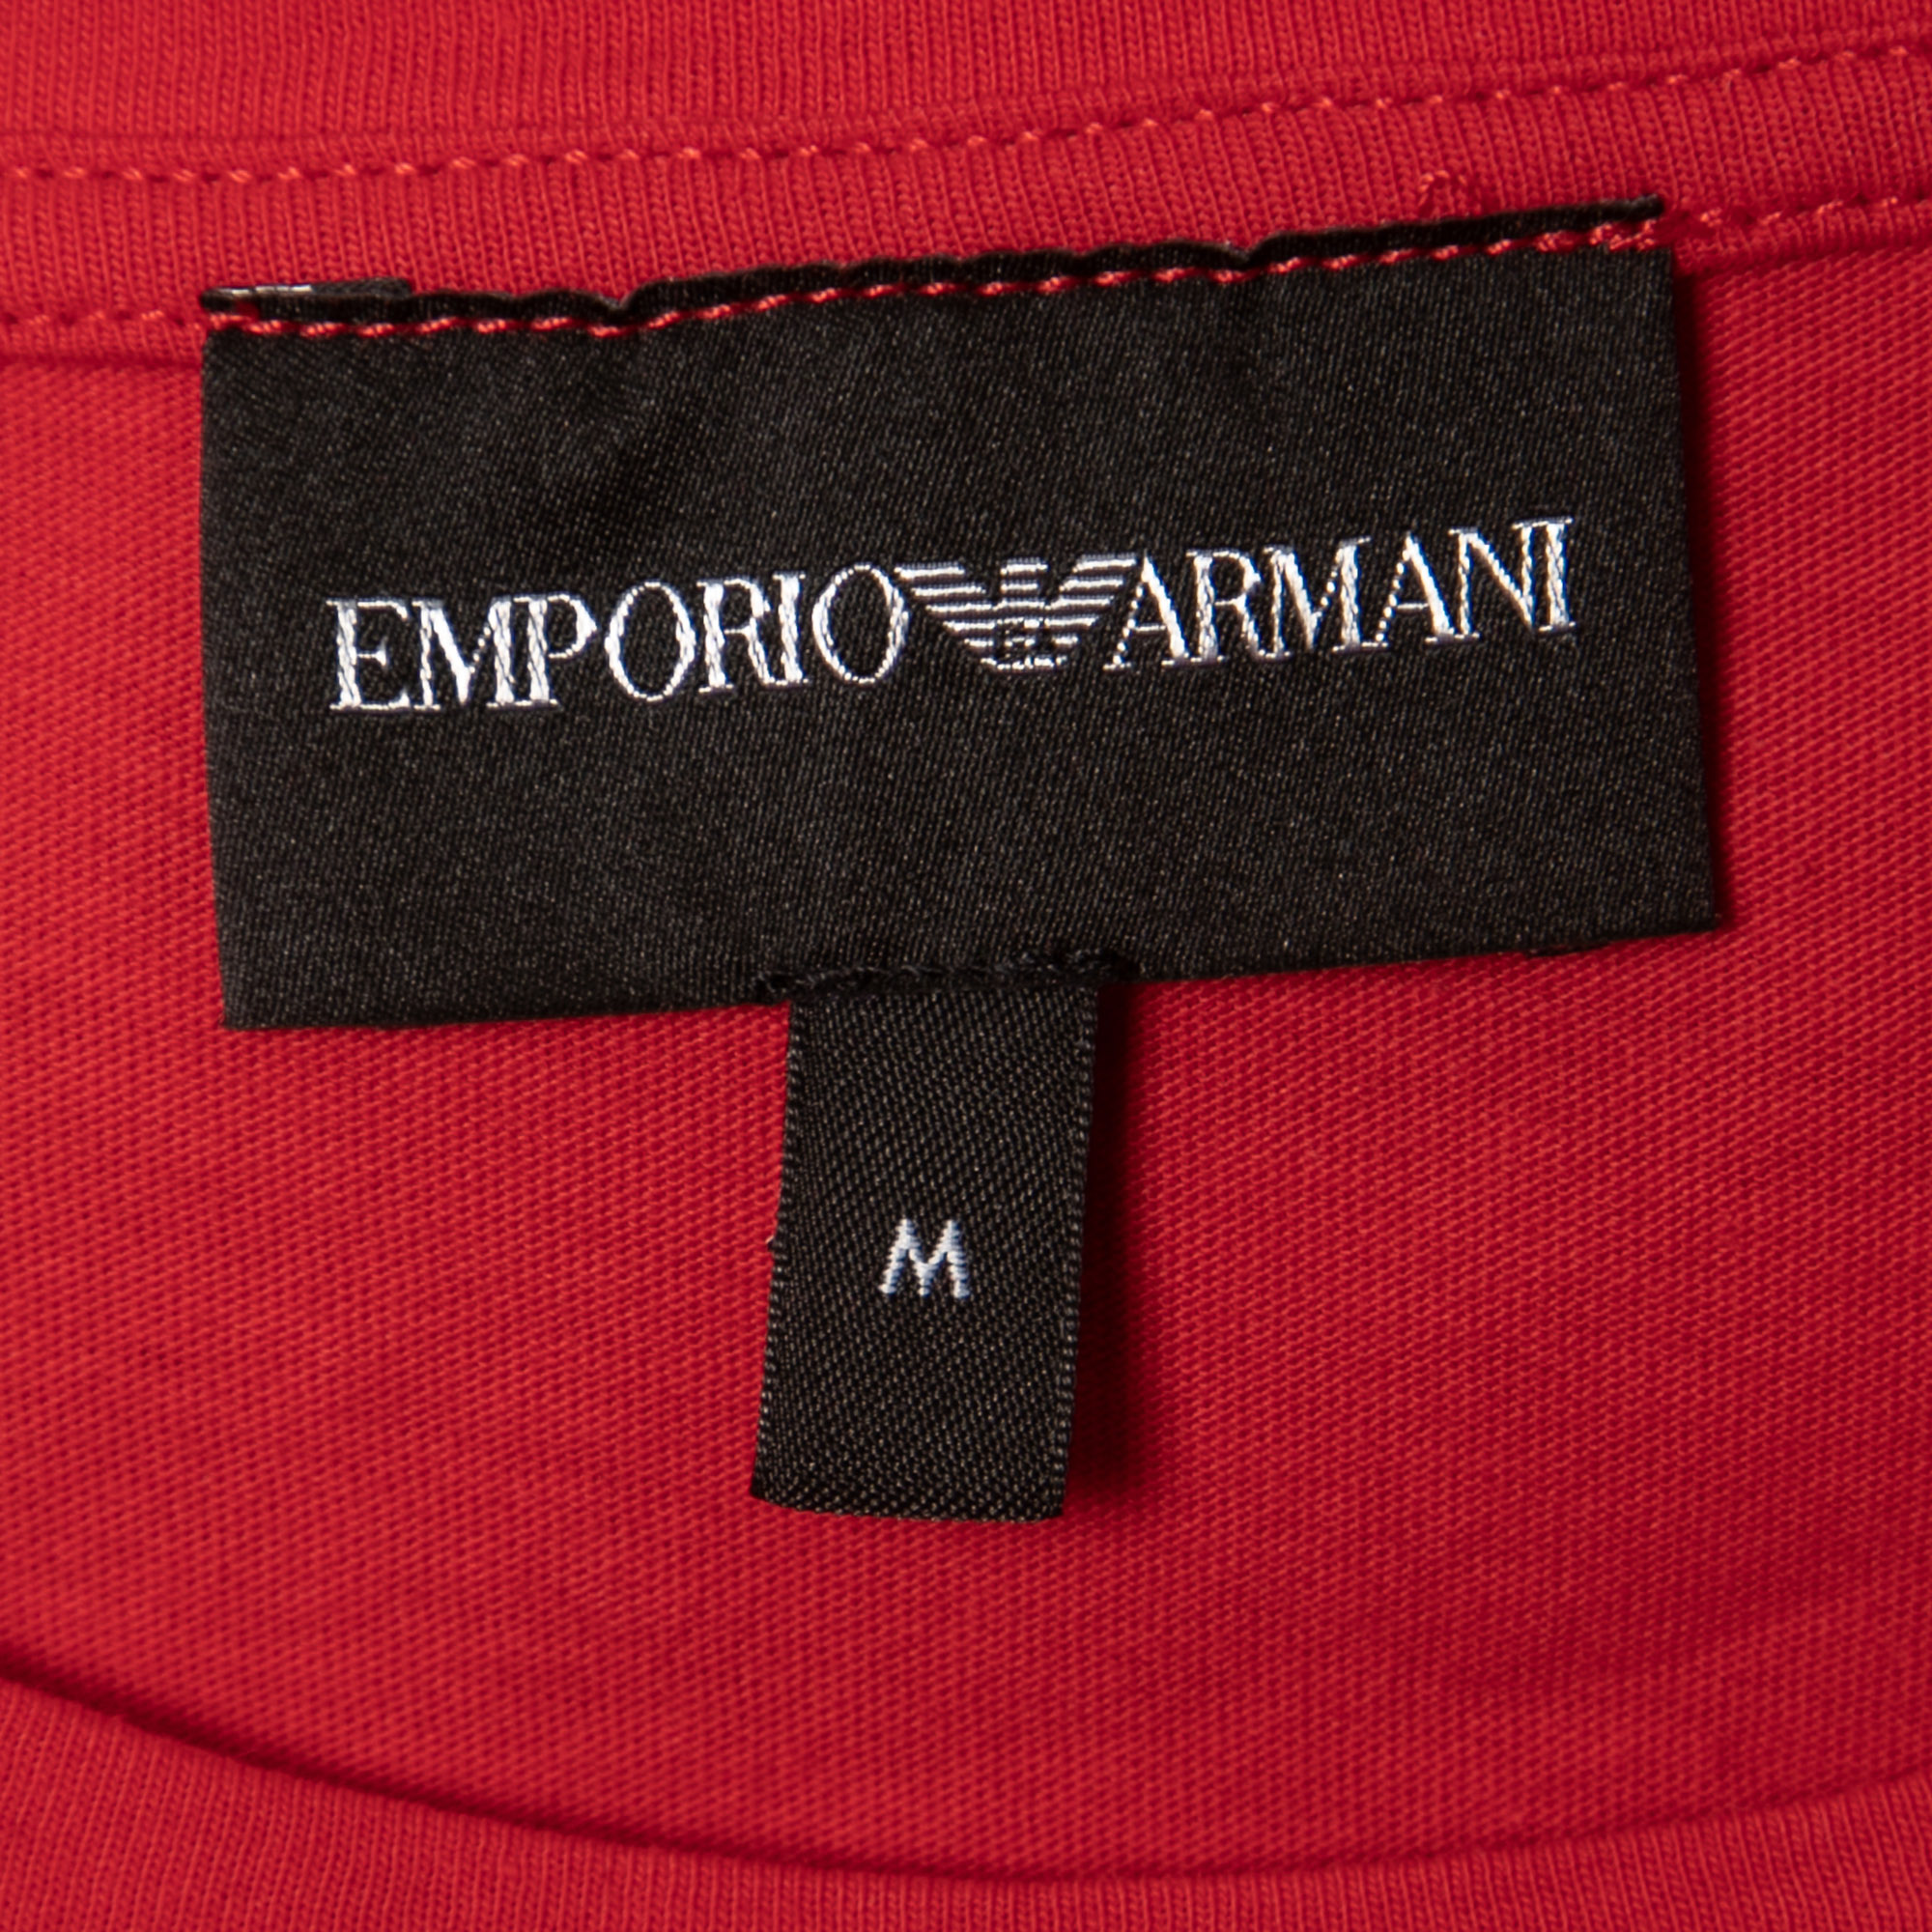 Emporio Armani Red Cotton Printed Crew Neck T-Shirt M